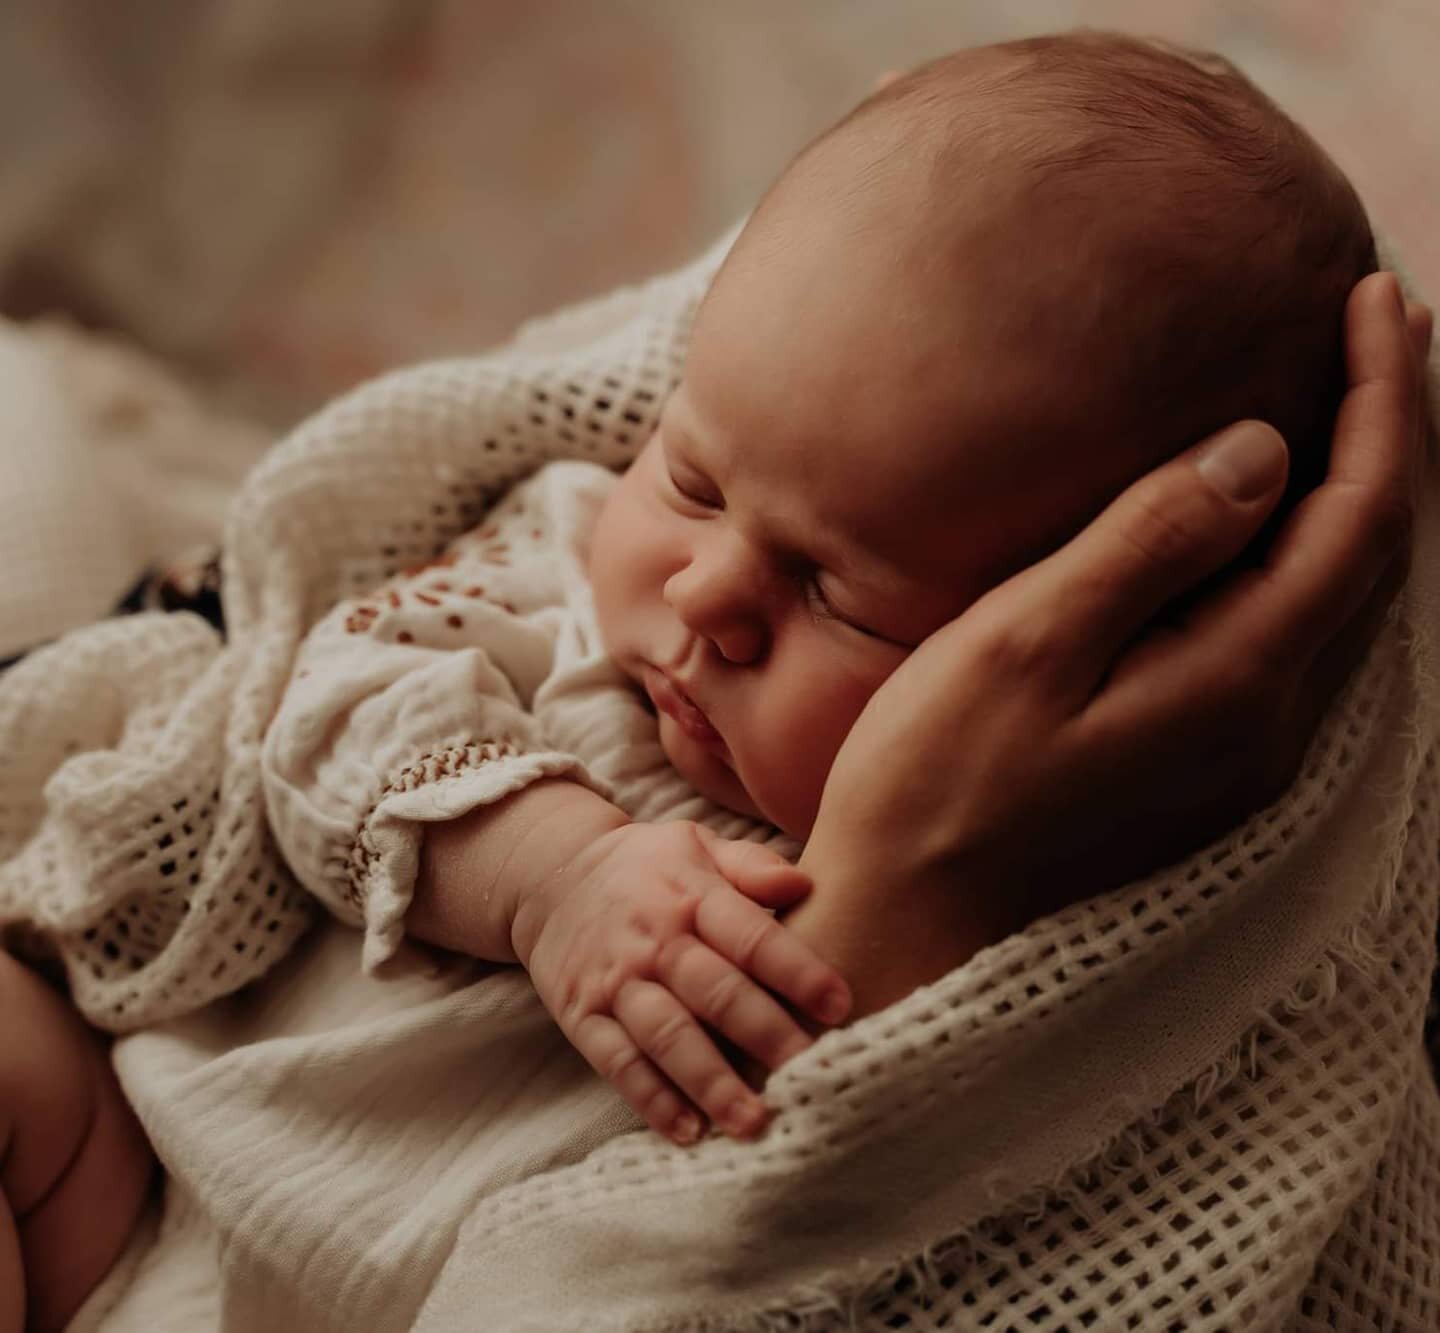 Beautiful baby Tilly! Absolutely stole my heart! Snuggles with mumma 
.
.
.
.
#emmasomervillephotography  #emmasomervillephotographystudio #studio #studiophotography #naturallightphotography #natural #newbaby #newborn #newborngirl #newbornfeatures #s